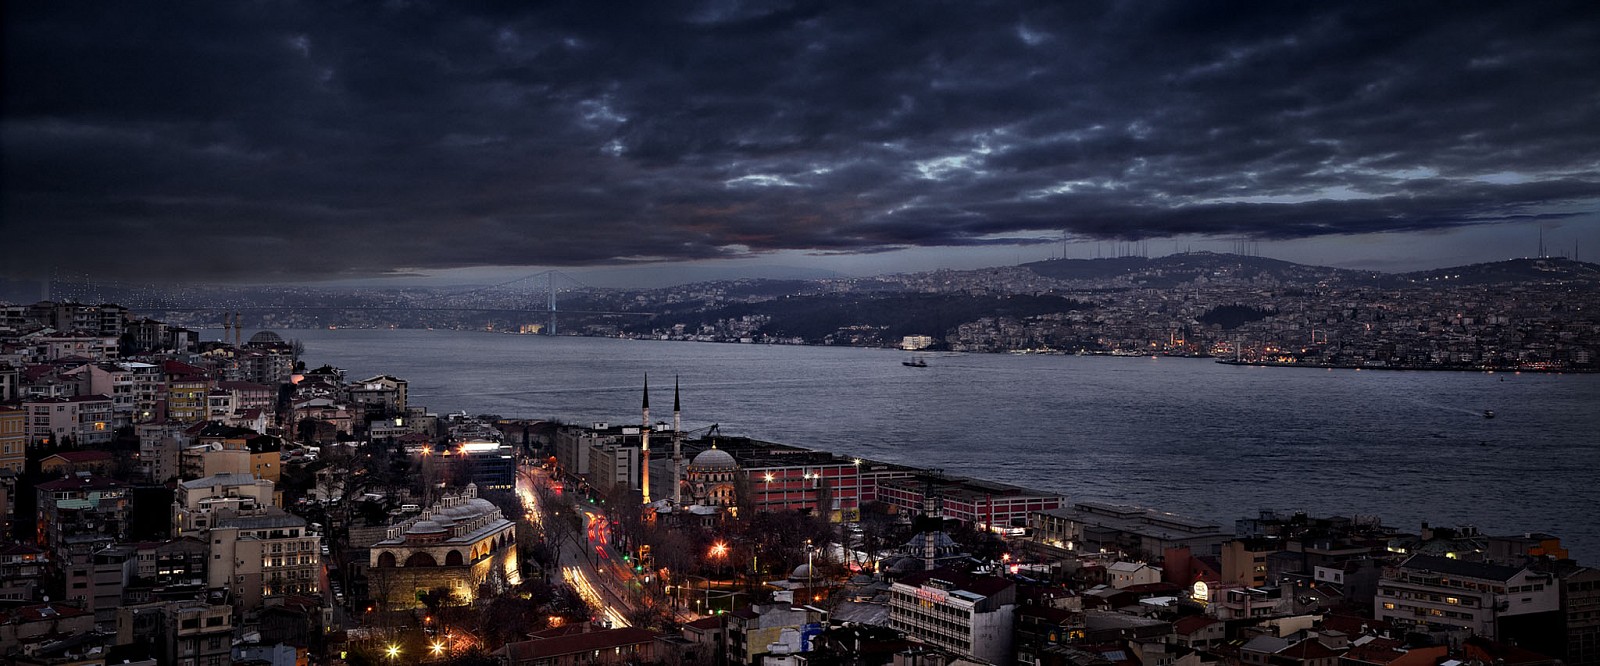 David Drebin, The Bosphorus, 2011
Digital C Print, 20 x 48 inches; 30 x 72 inches; 40 x 96 inches